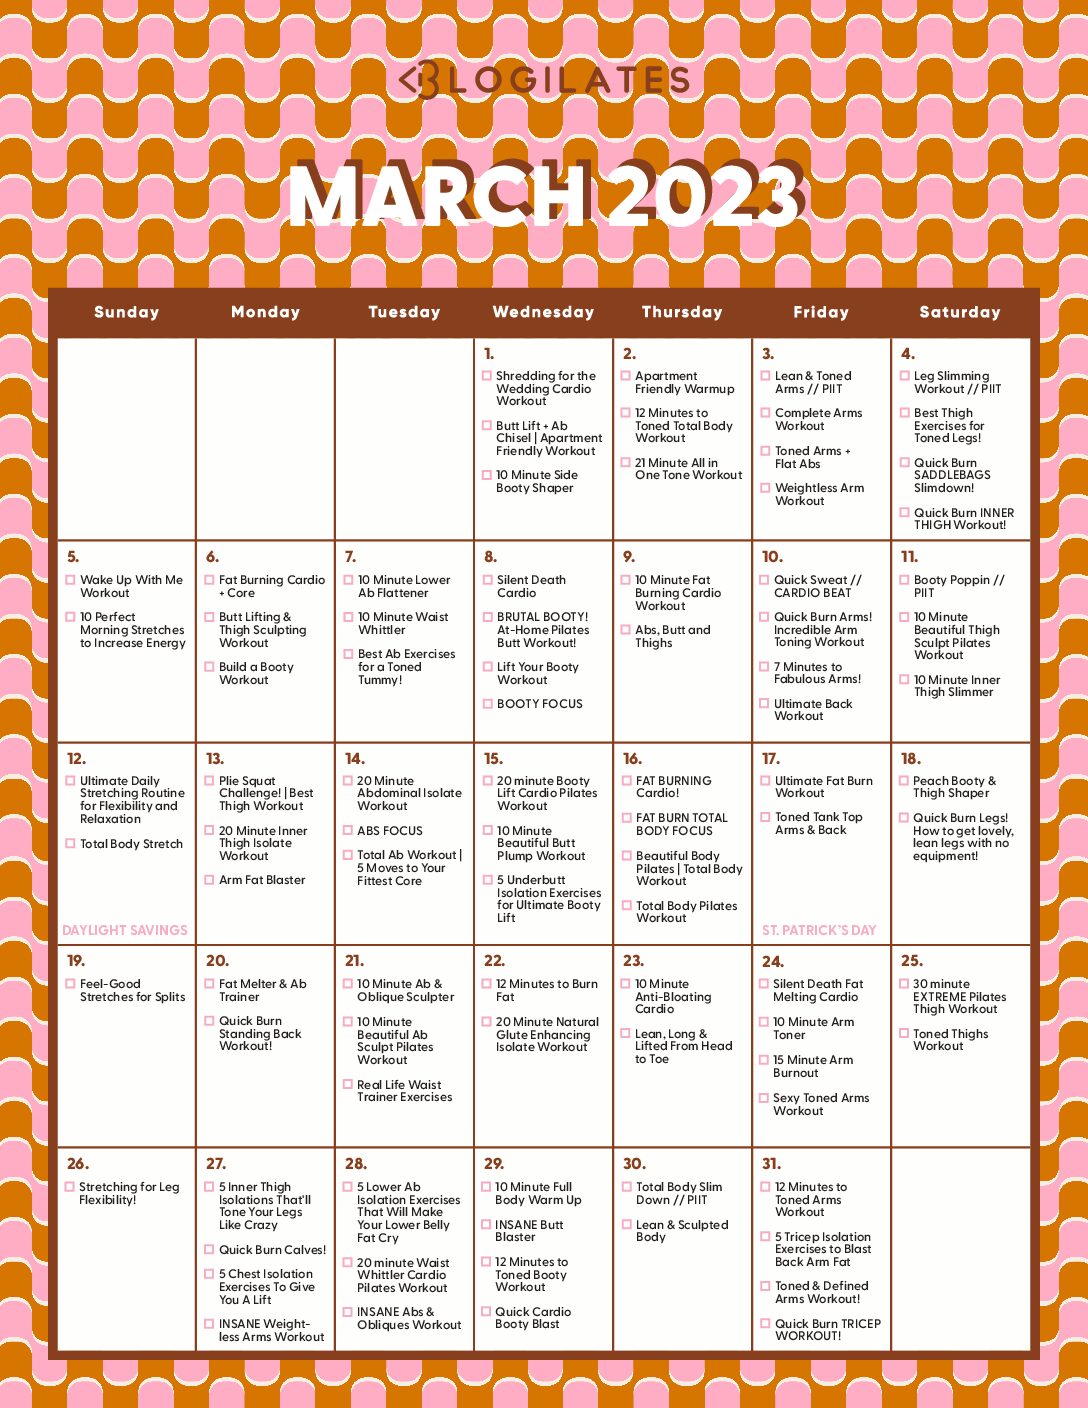 The Blogilates March 2023 Workout Calendar! - Blogilates